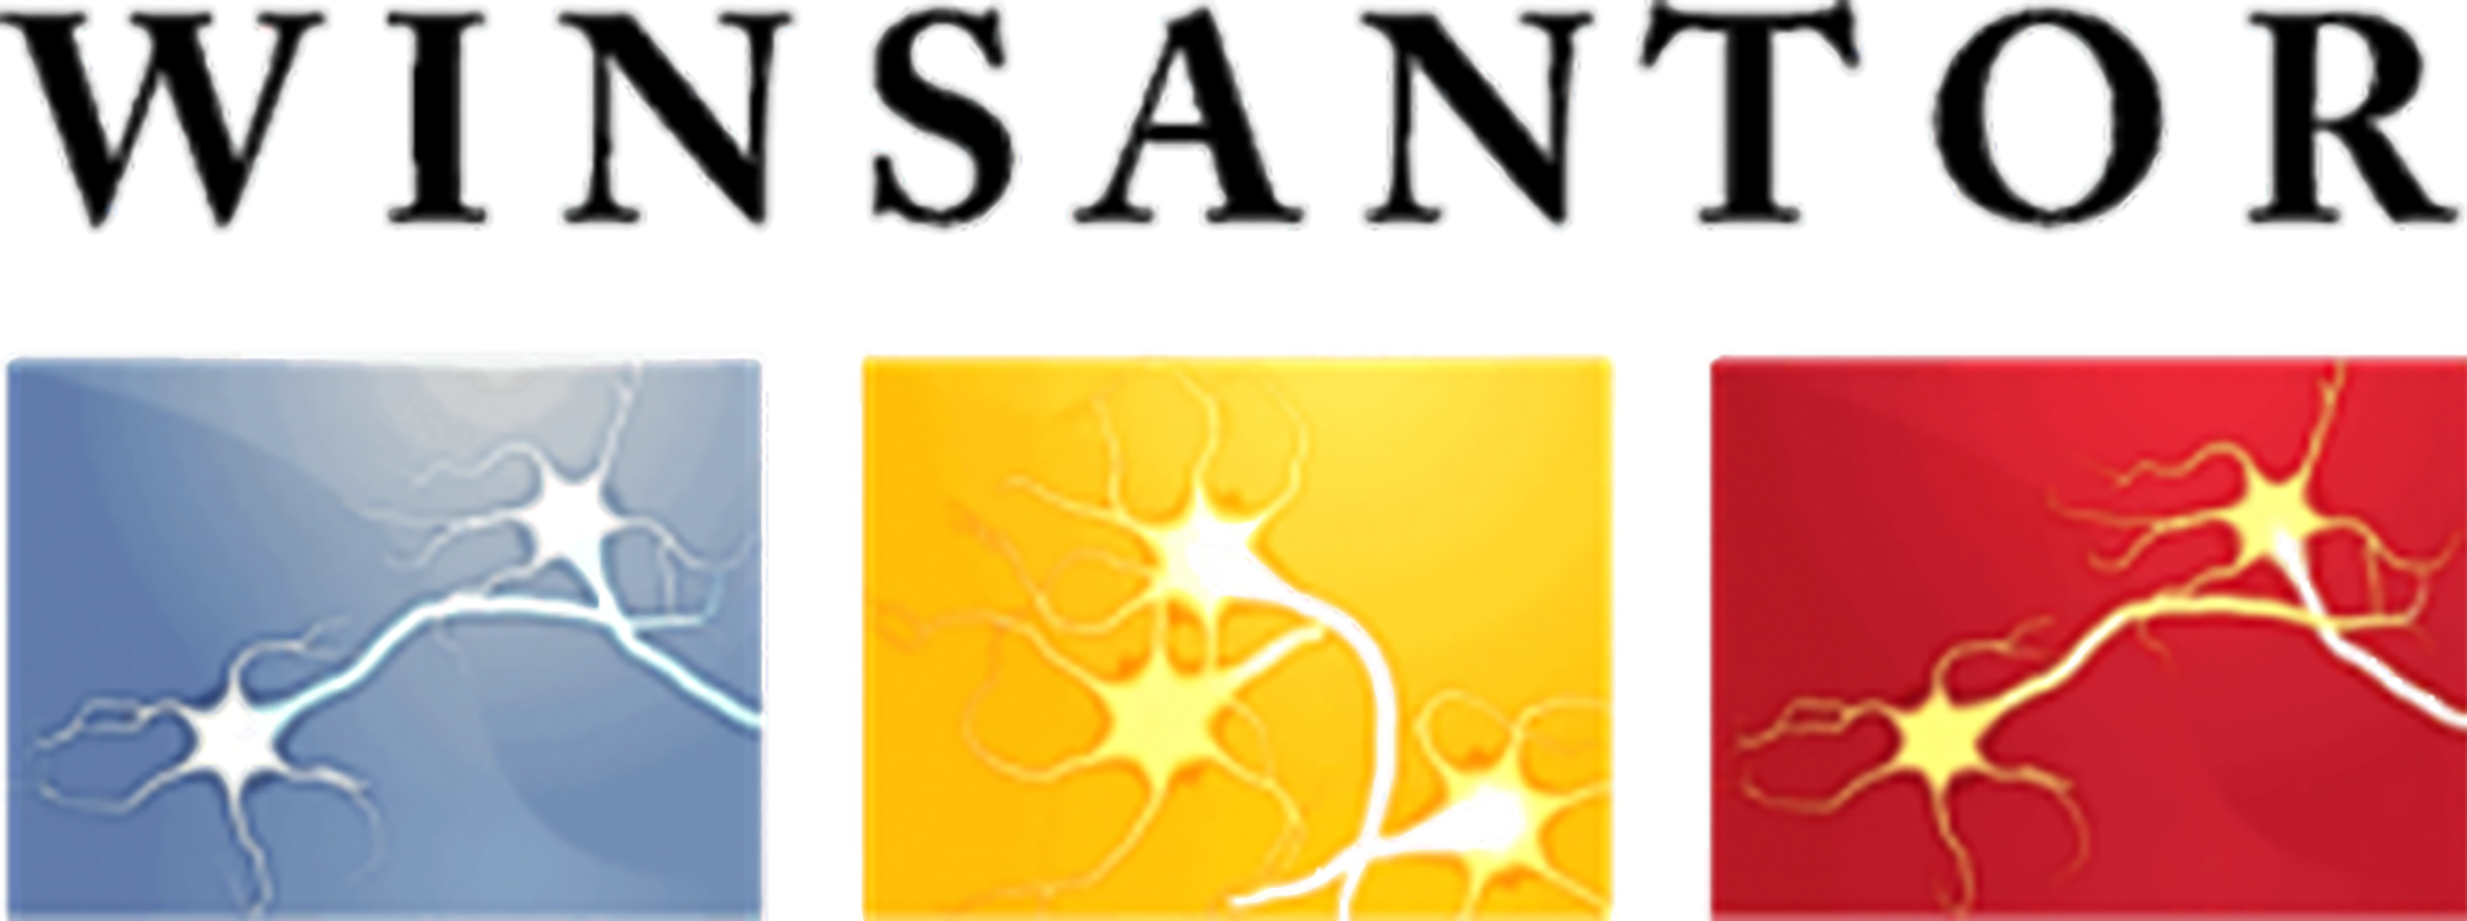 WinSanTor logo.png